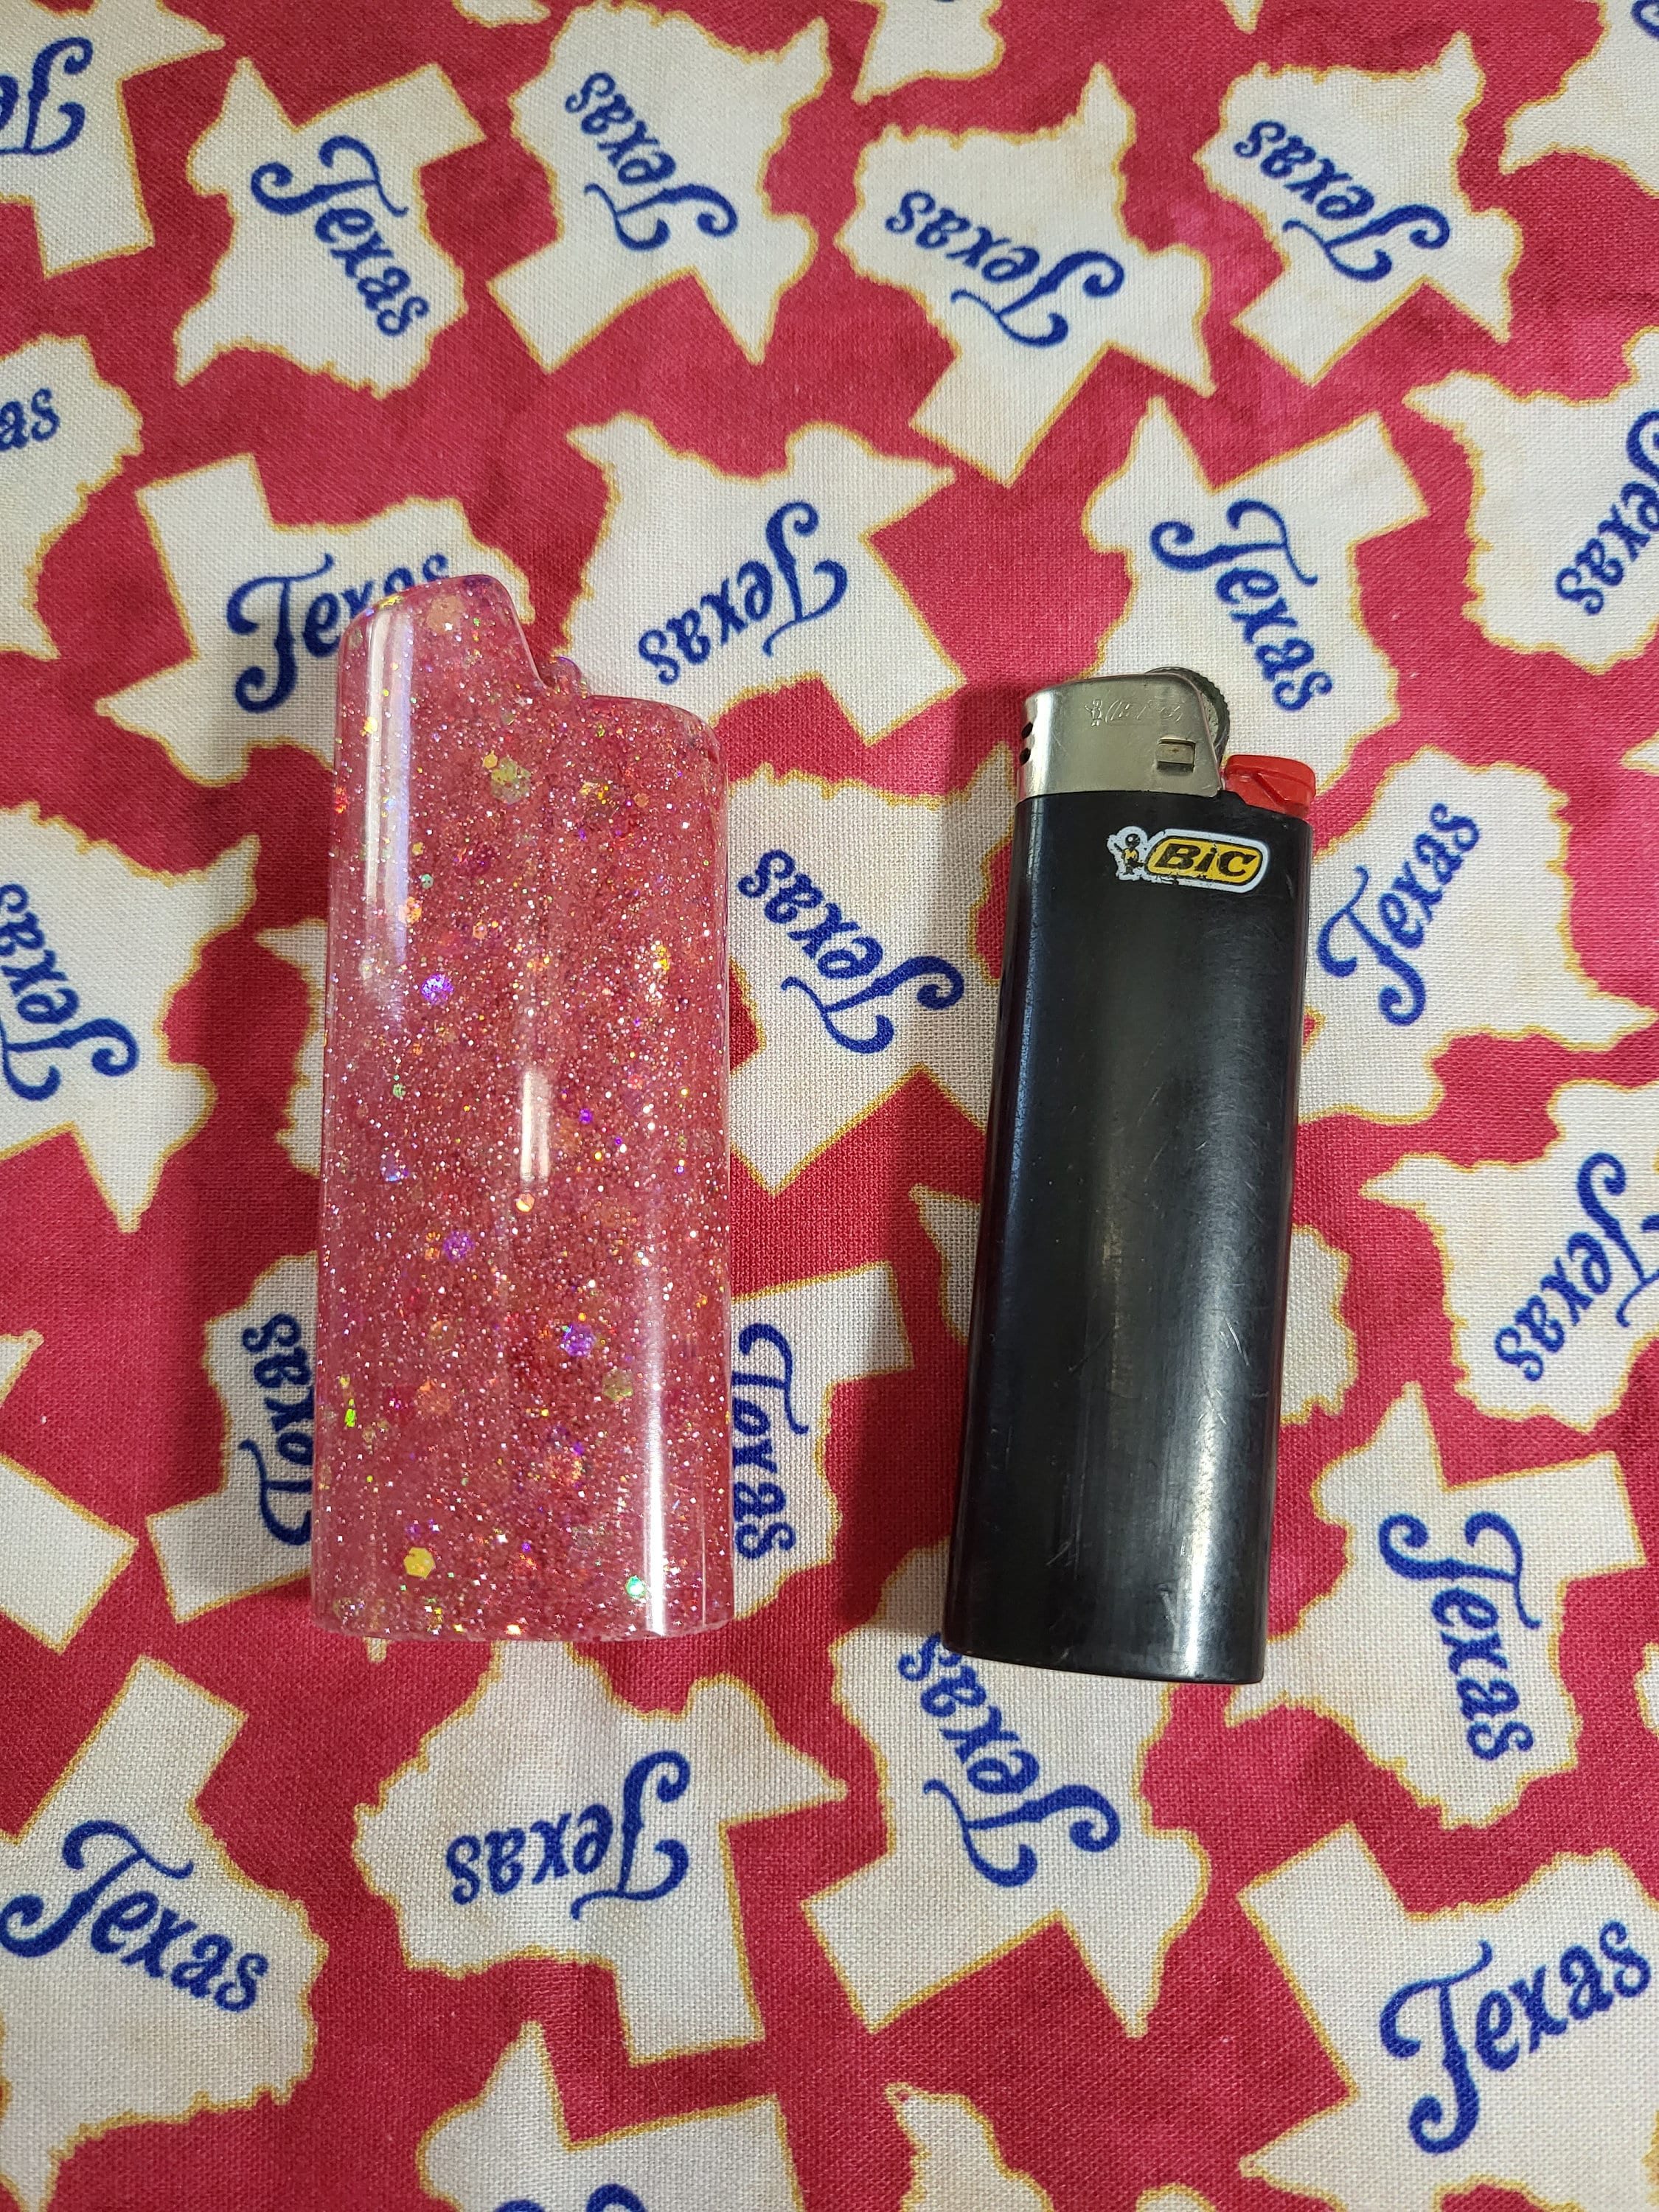 Pink Flamingo Design Custom Case for BIC Lighters